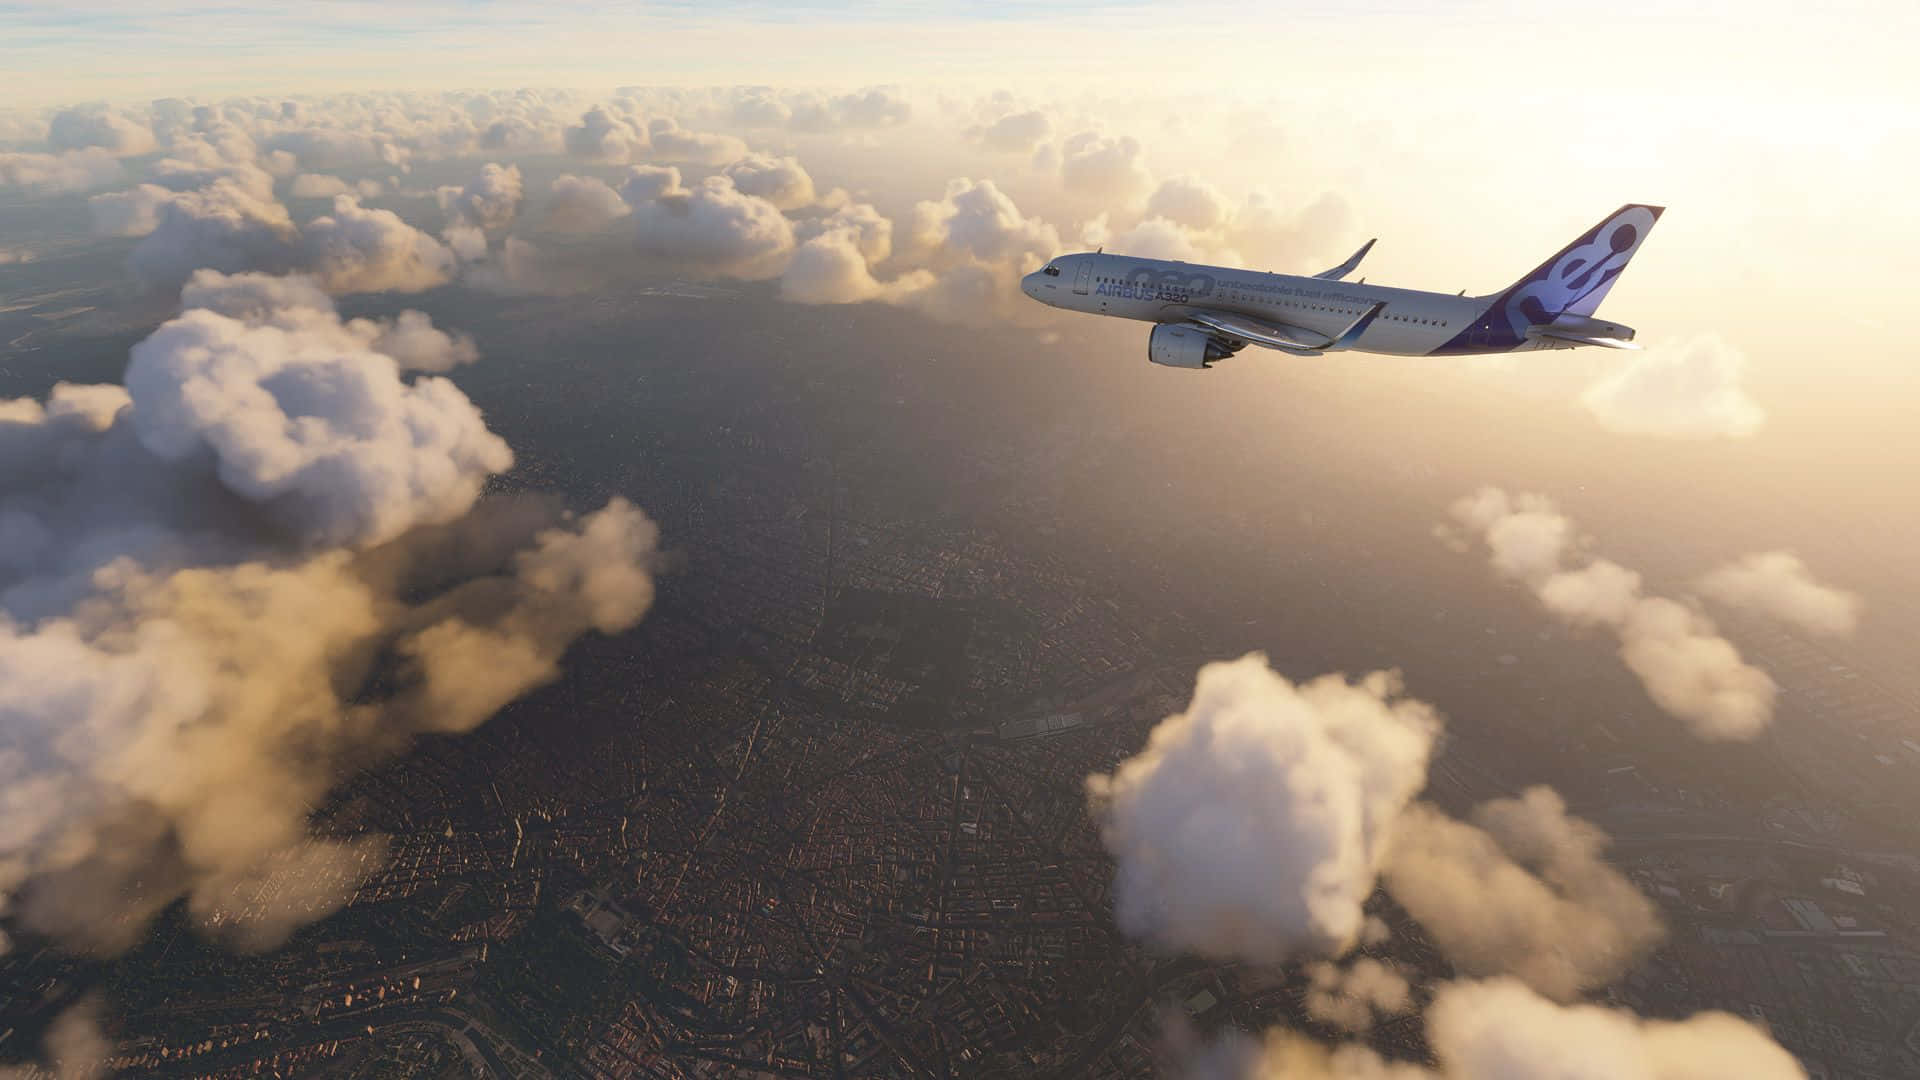 Enjoy the scenery in 1080p with Microsoft Flight Simulator